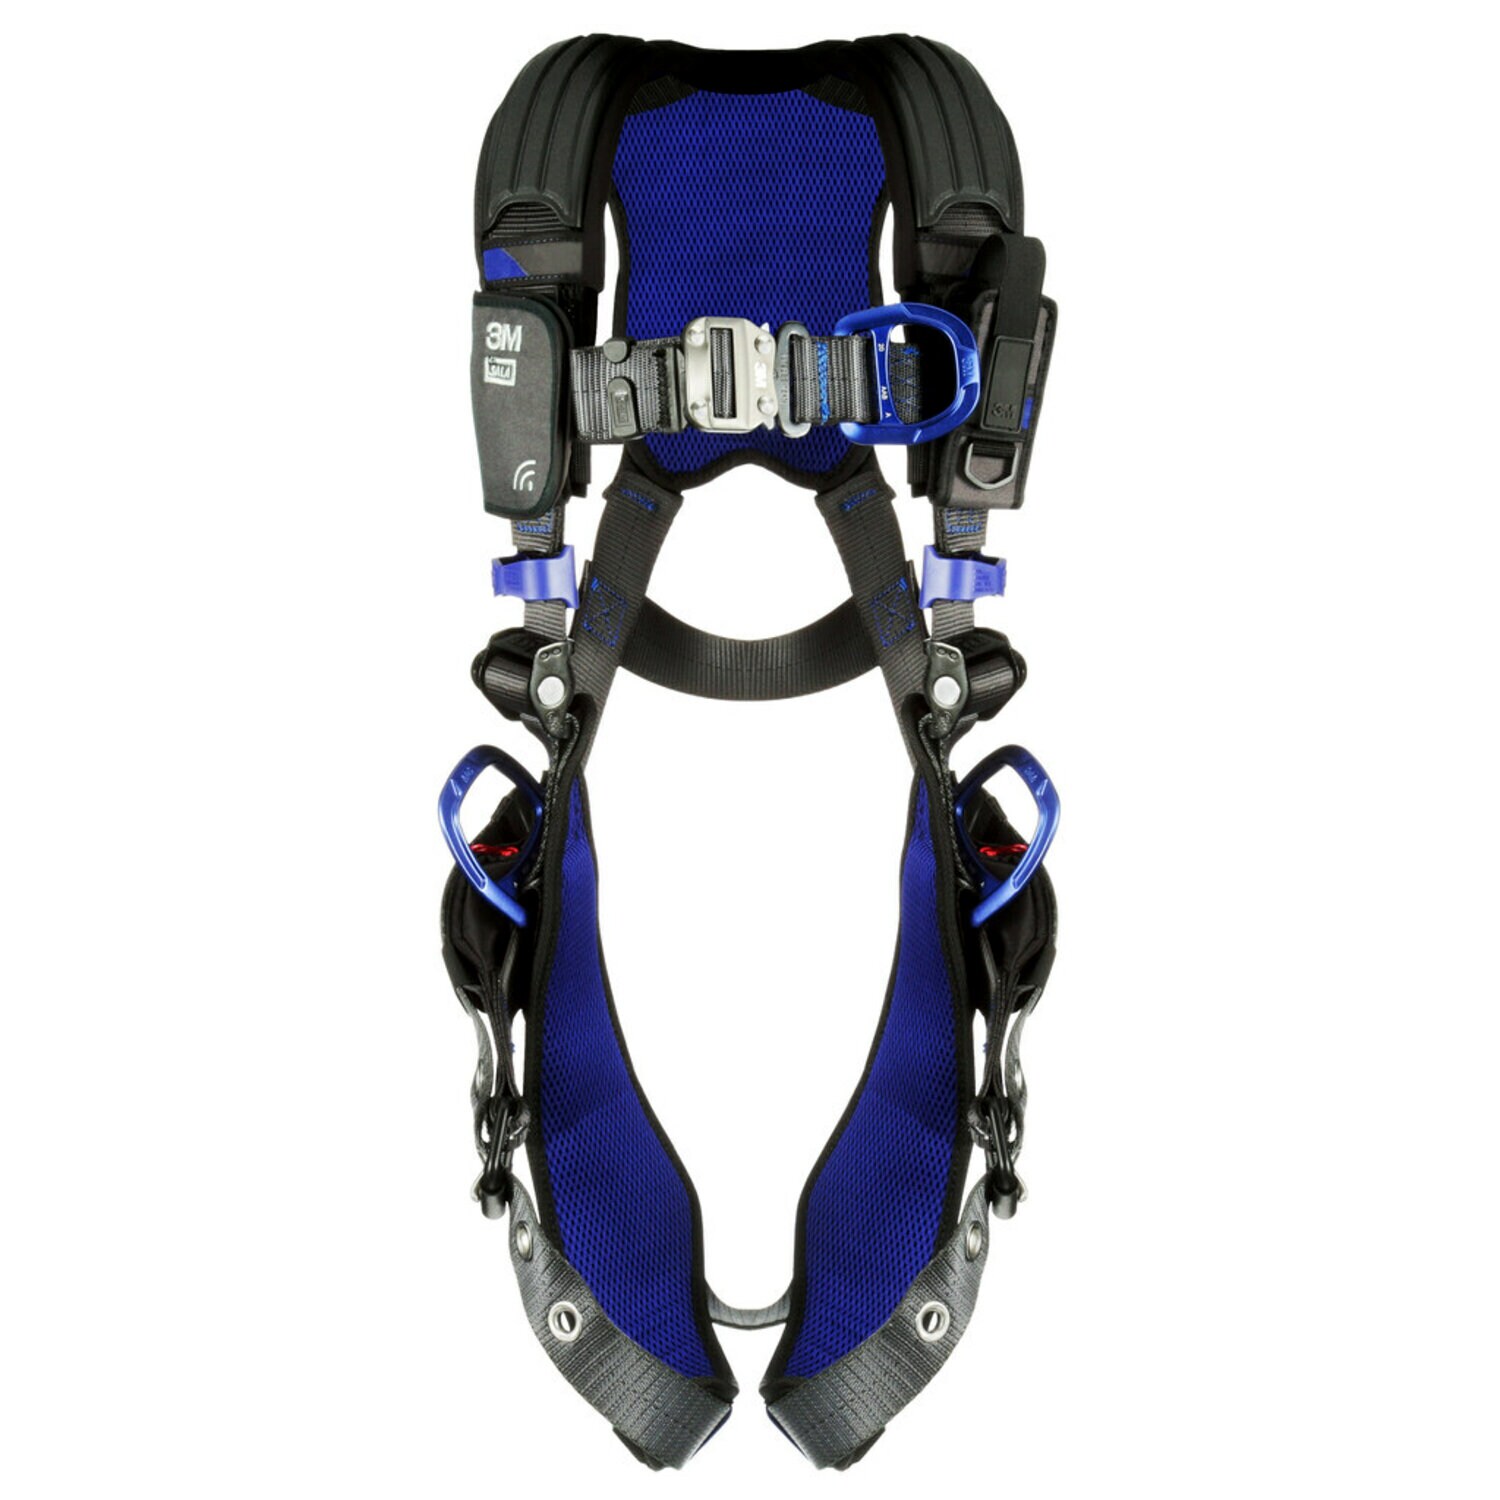 7012816353 - 3M DBI-SALA ExoFit NEX Comfort Vest Climbing/Positioning Safety Harness 1113421, Medium